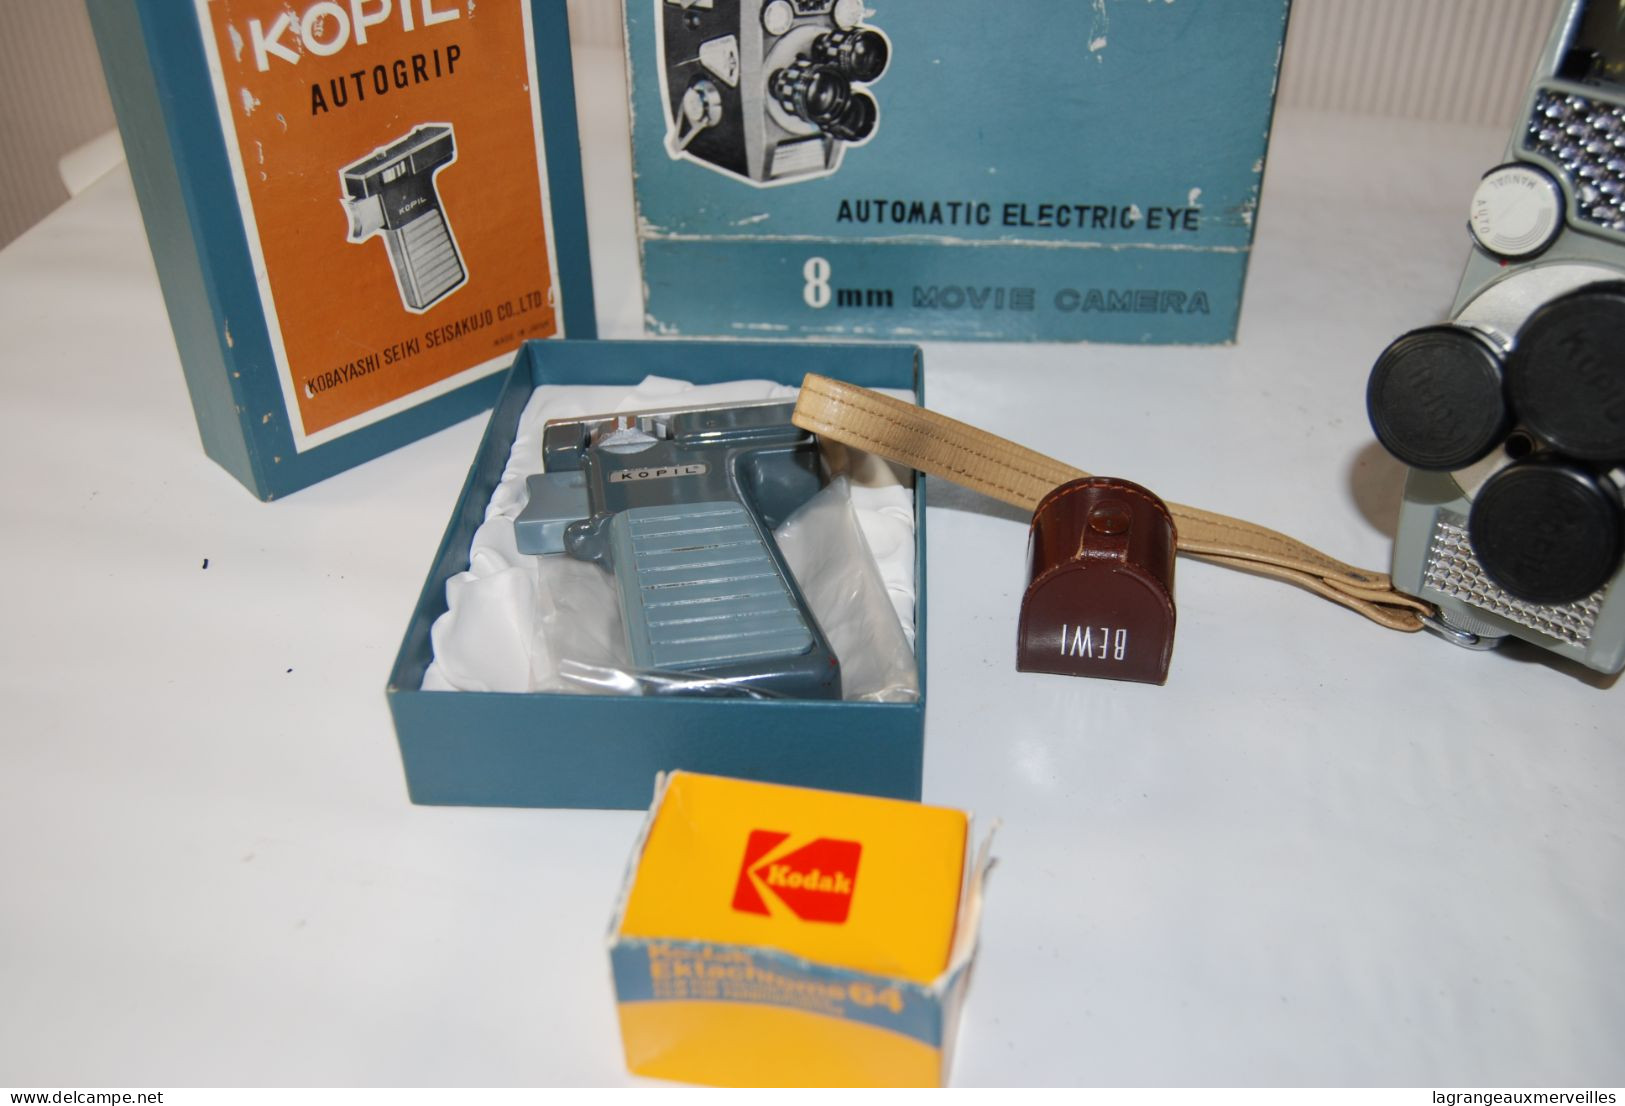 E2 Appareil KOPIL-1A - Autogrip - Vintage - Electric Eye - Fotoapparate